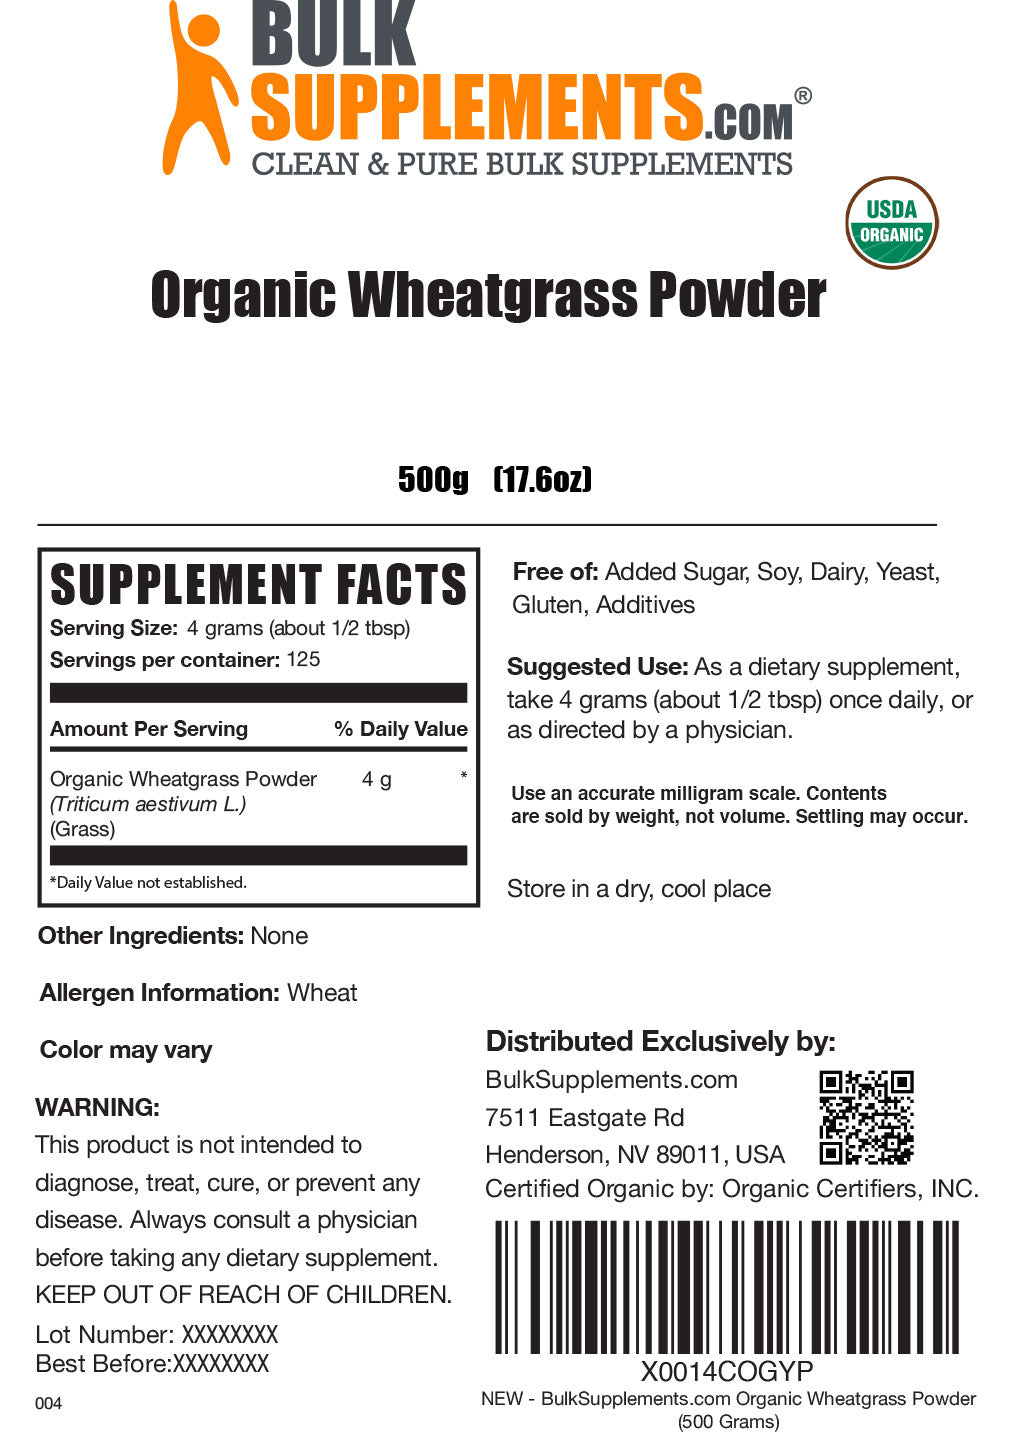 Organic Wheatgrass Powder Label 500g